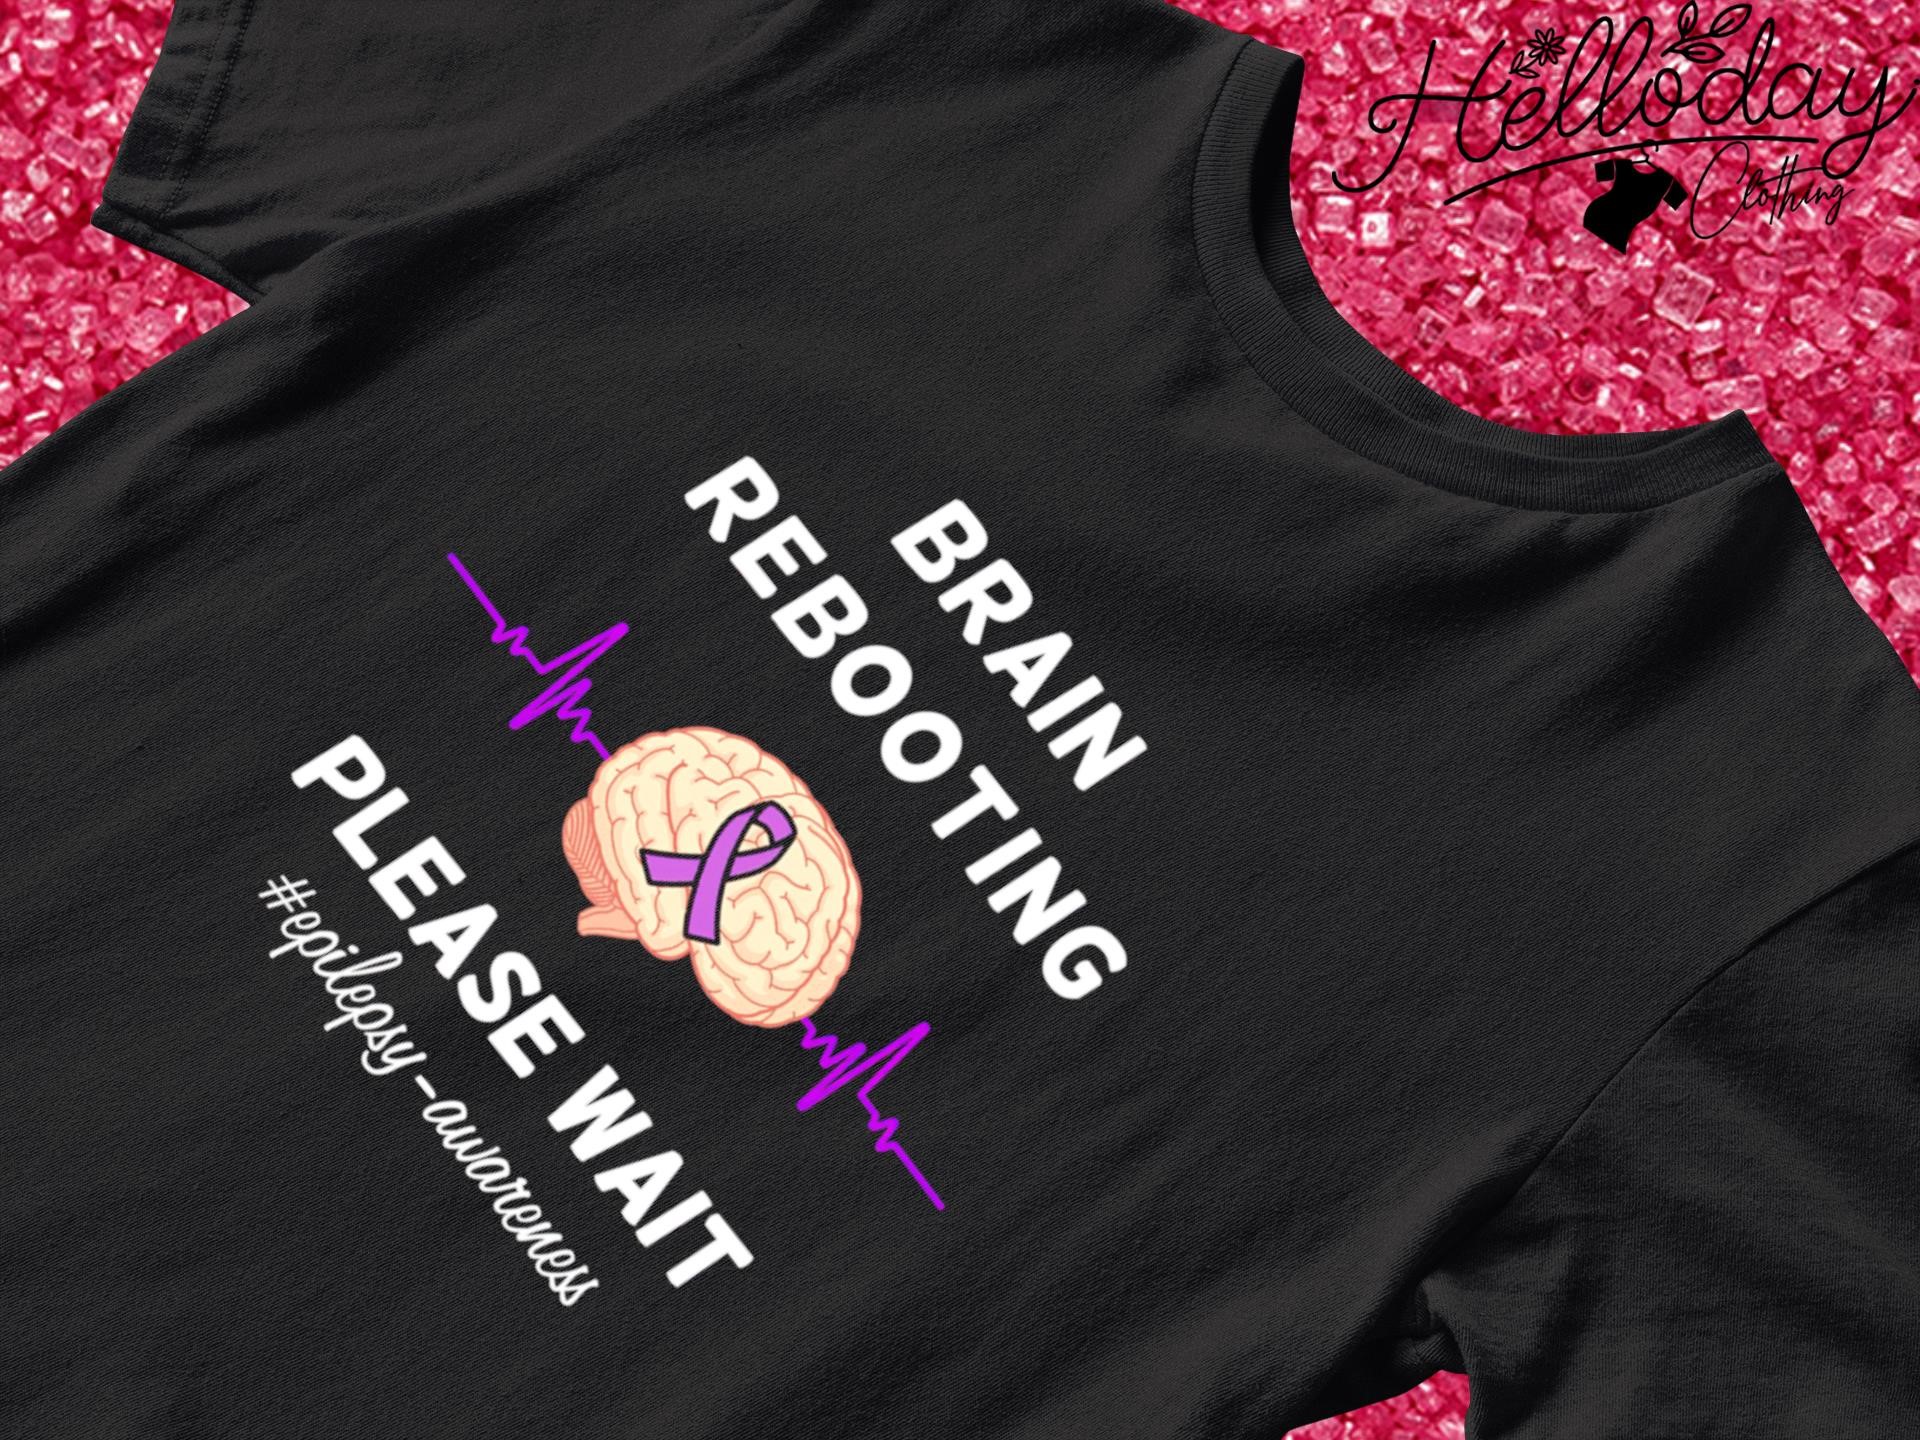 Brain Rebooting please wait Awareness shirt